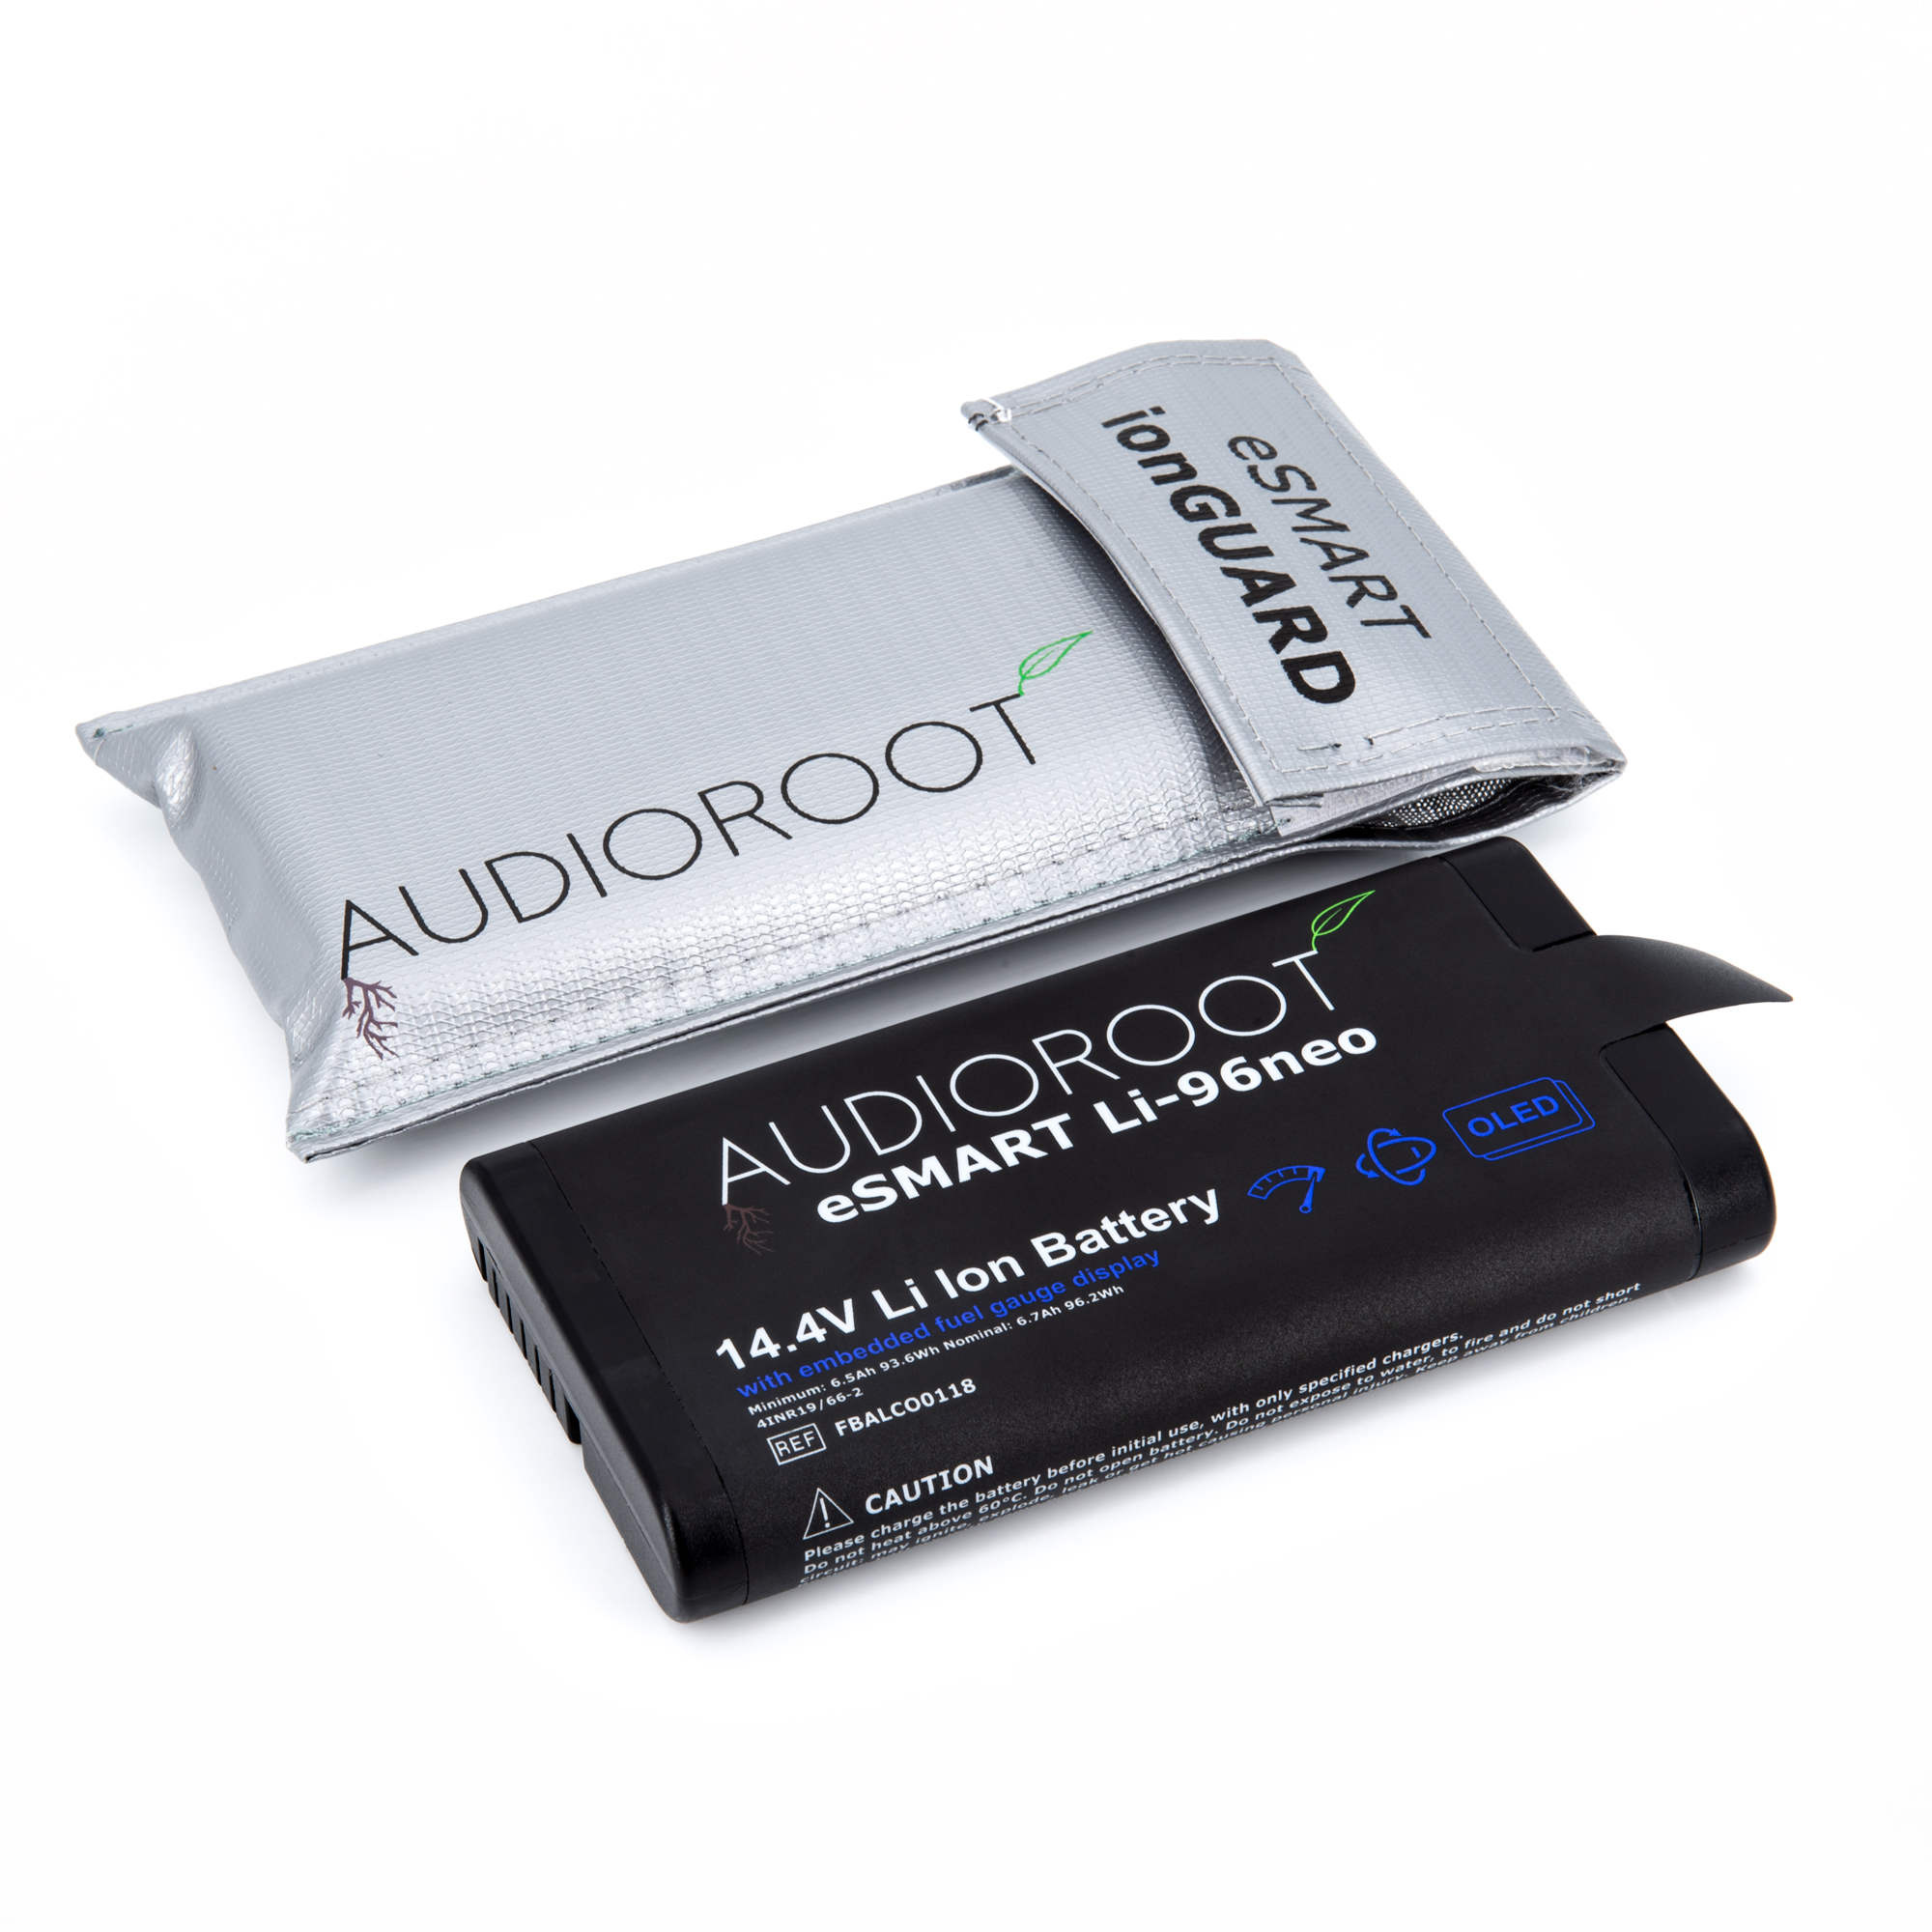 Audioroot Audioroot - Ionguard Schutzhülle